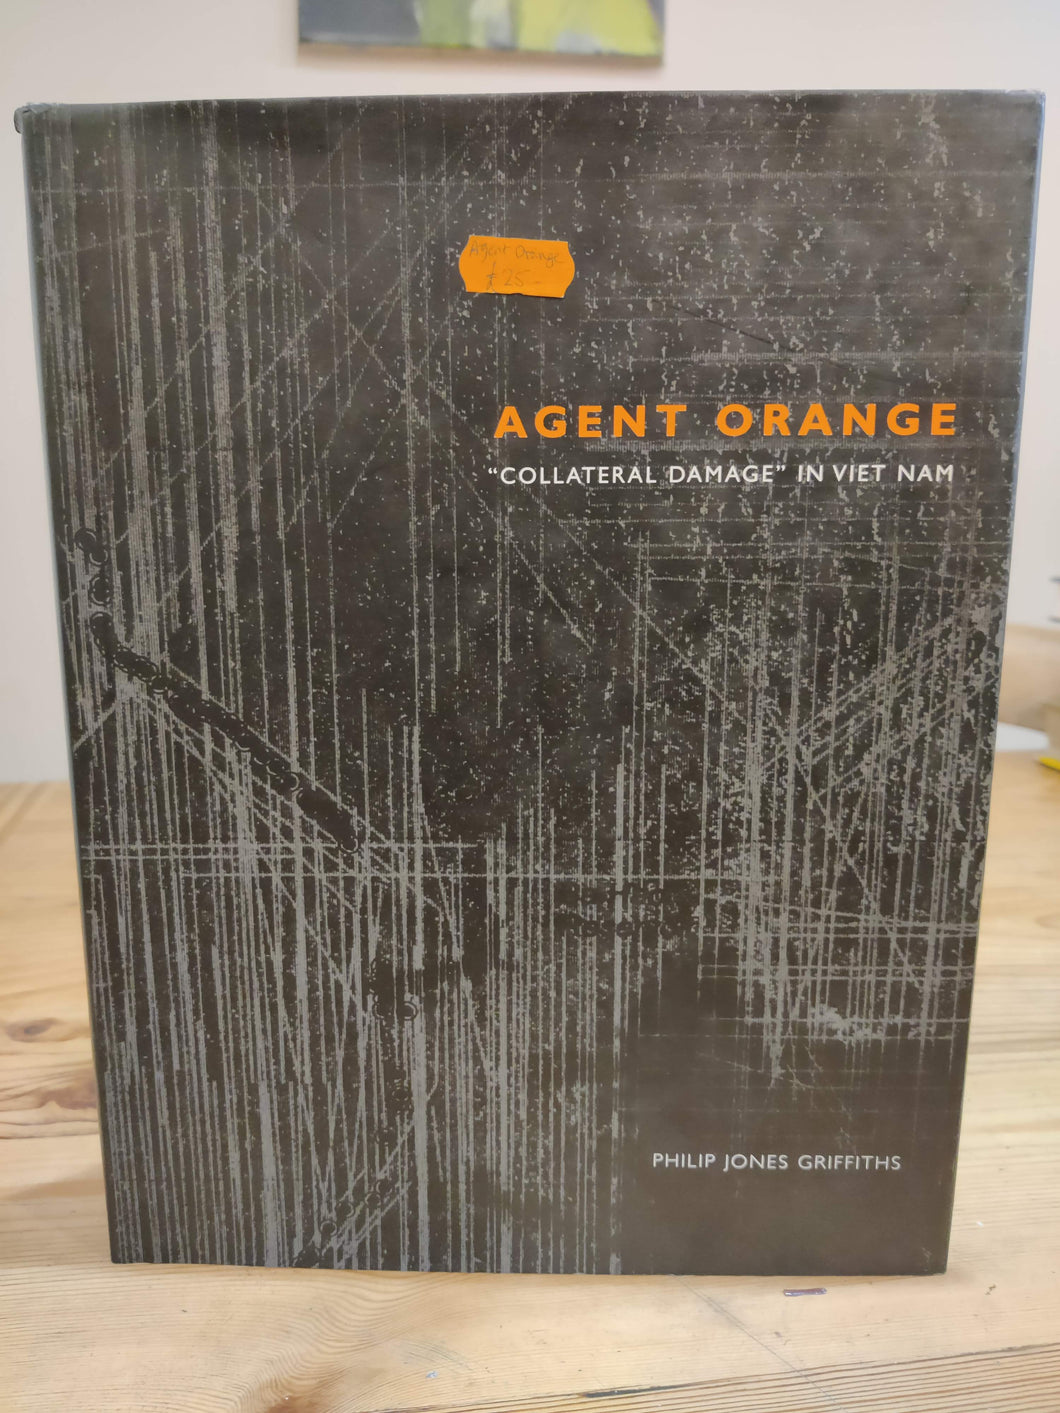 Agent Orange: “Collateral Damage” in Viet Nam